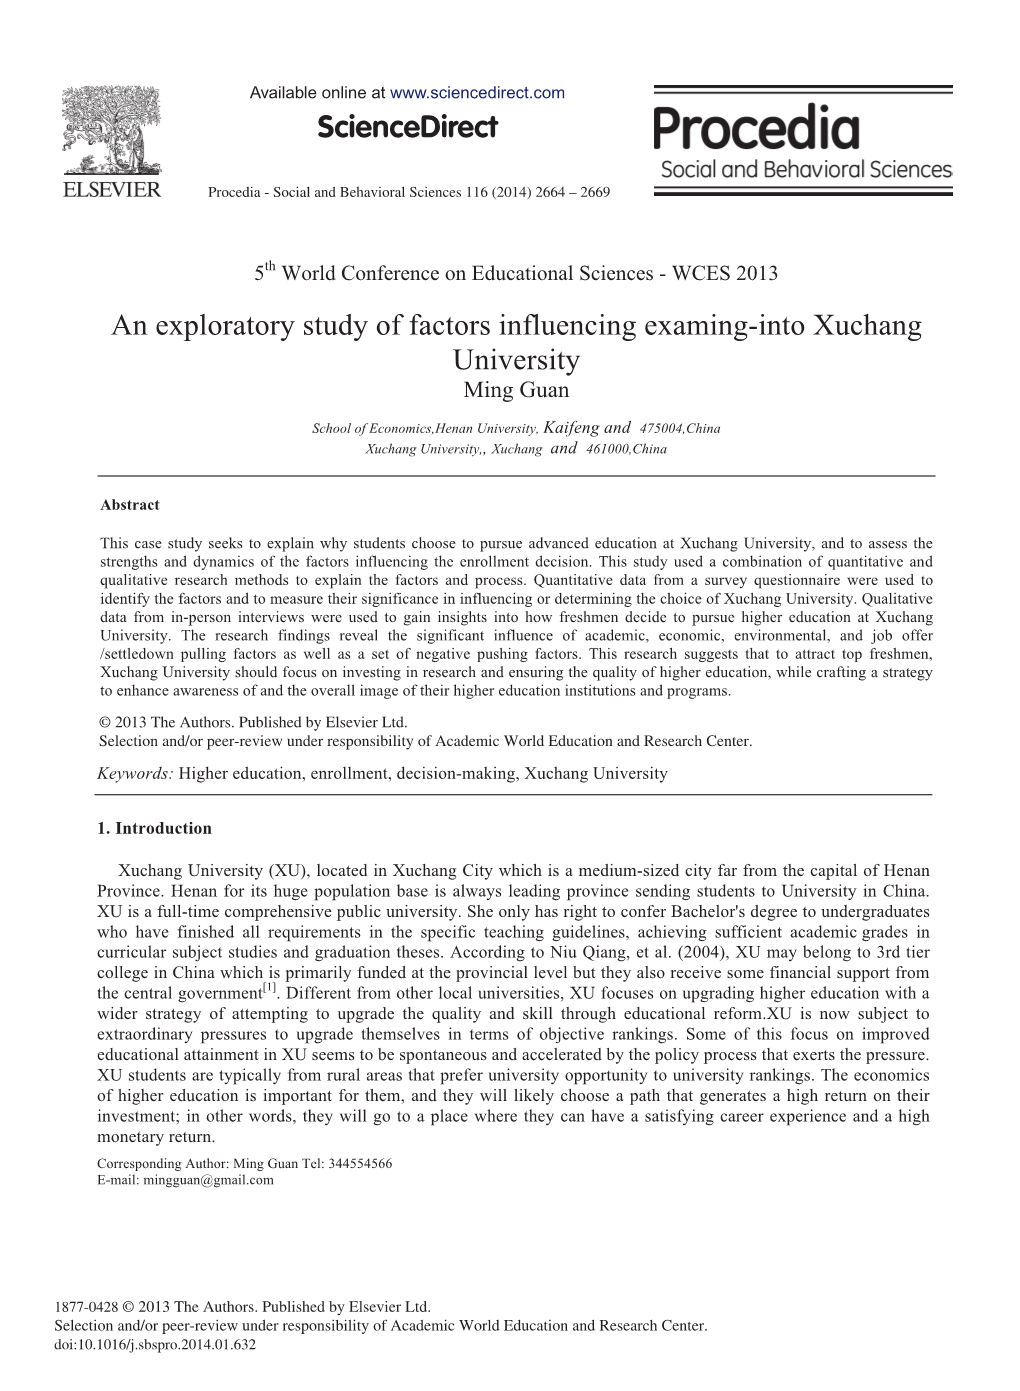 An Exploratory Study of Factors Influencing Examing-Into Xuchang University Ming Guan